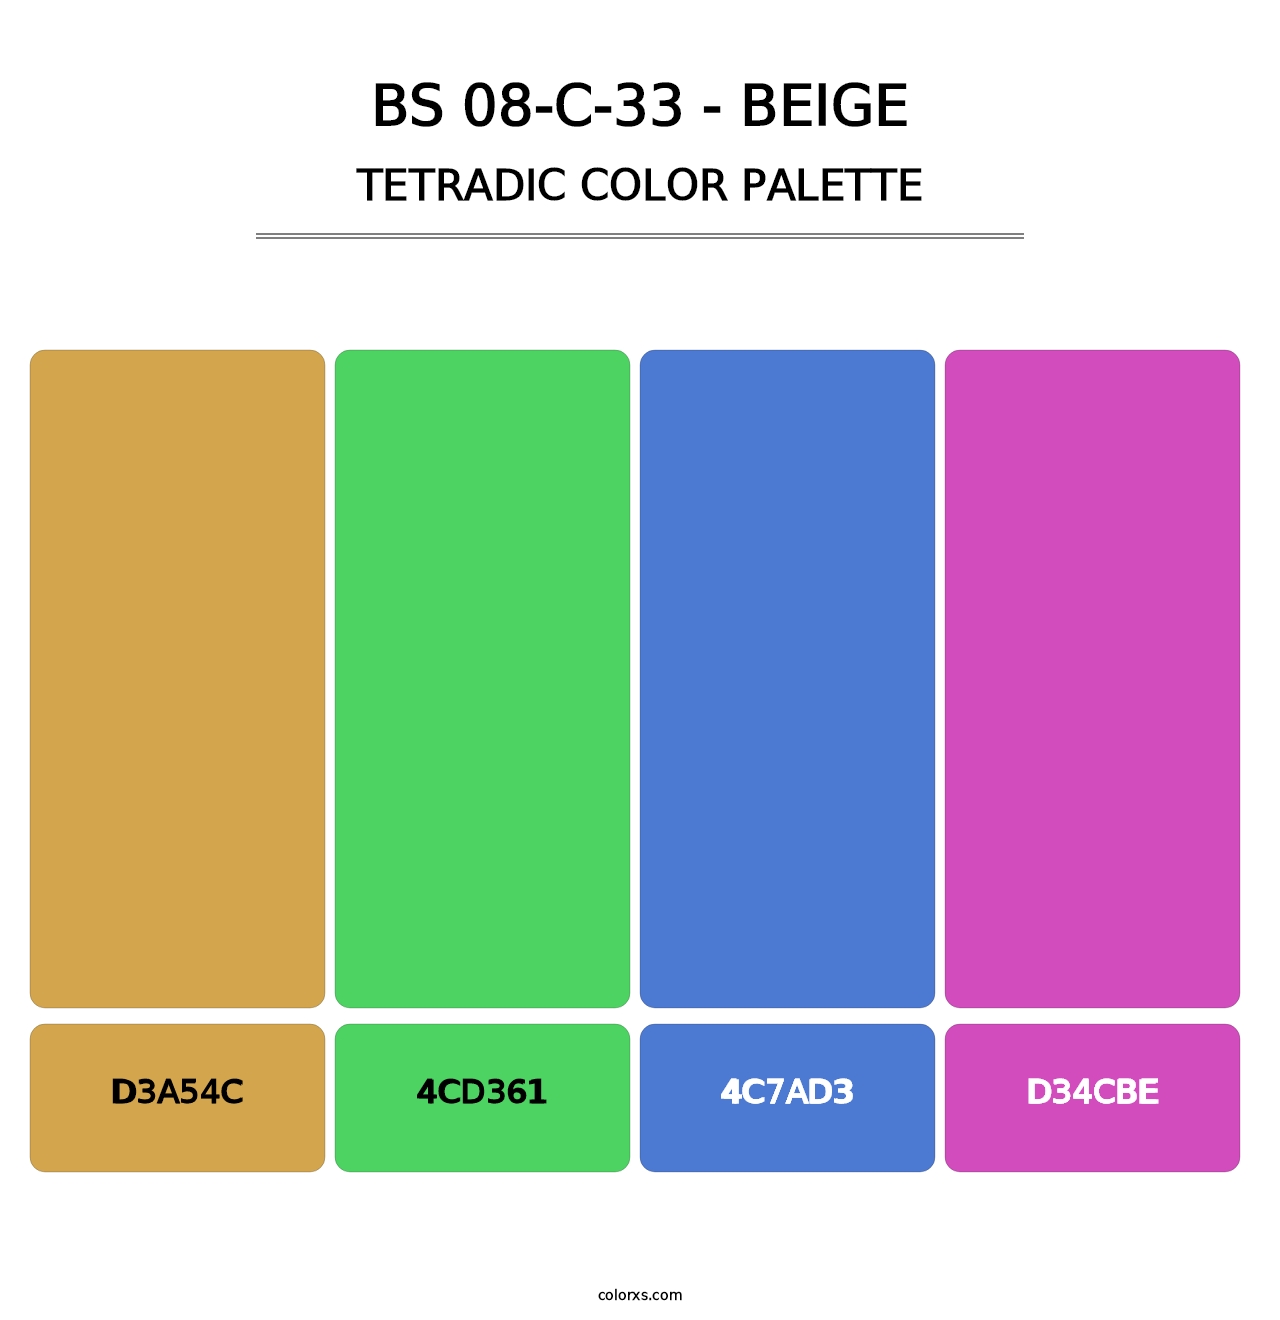 BS 08-C-33 - Beige - Tetradic Color Palette